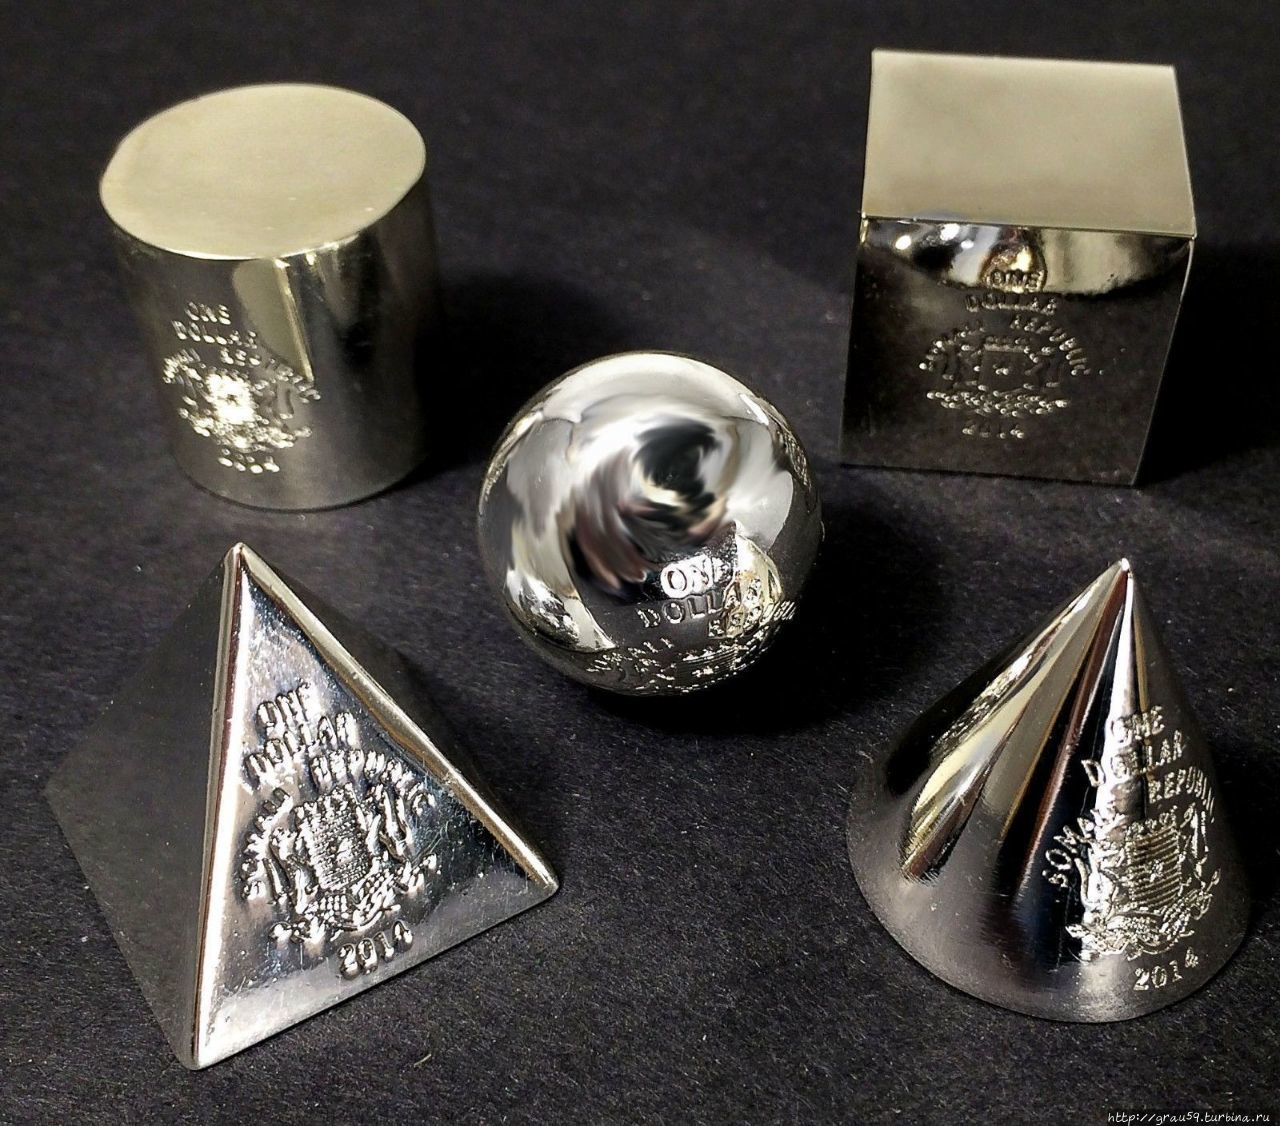 3D-монеты. Геометрия: Шары, конусы, цилиндры, пирамиды, кубы Сомали